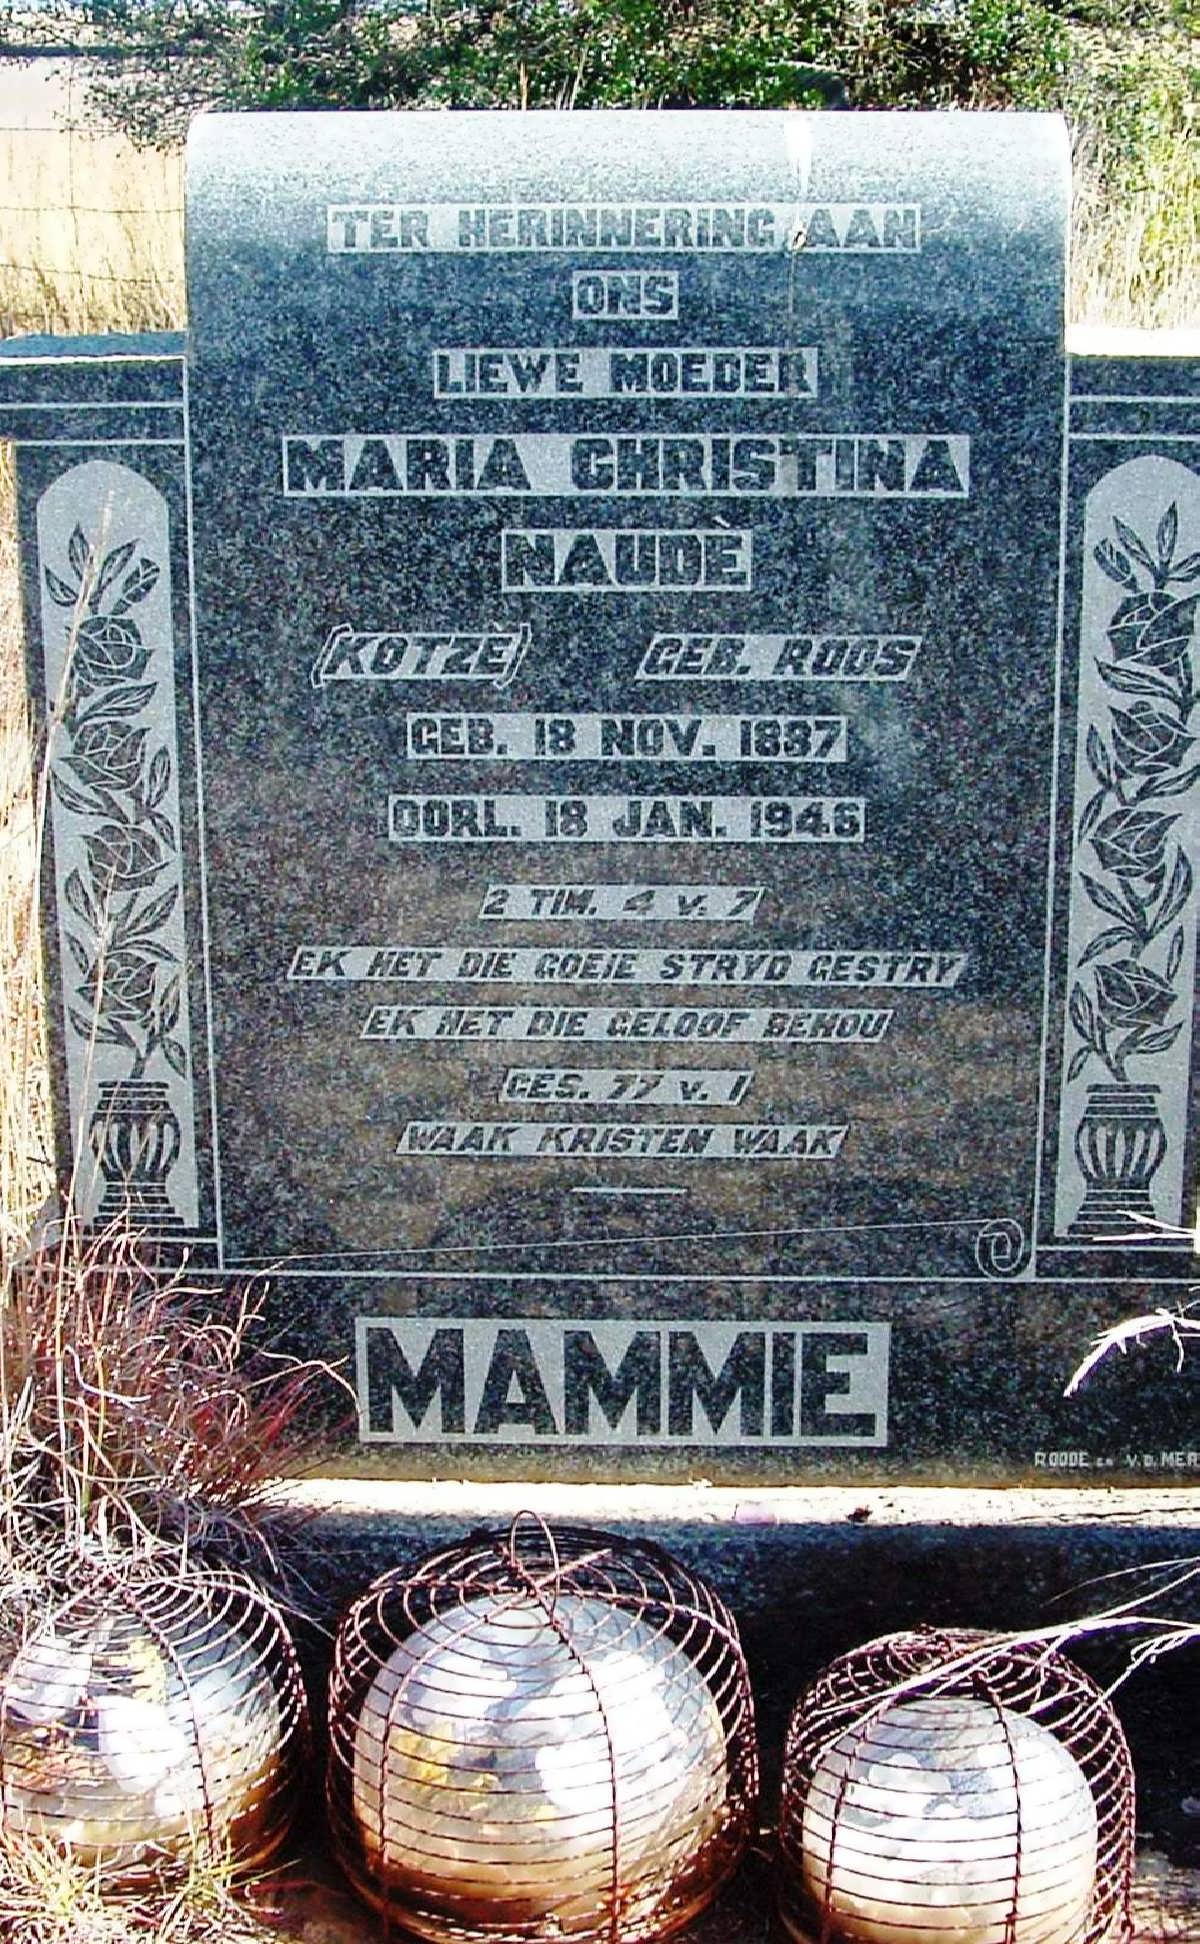 NAUDE Maria Christina formerly KOTZE nee ROOS 1887-1945